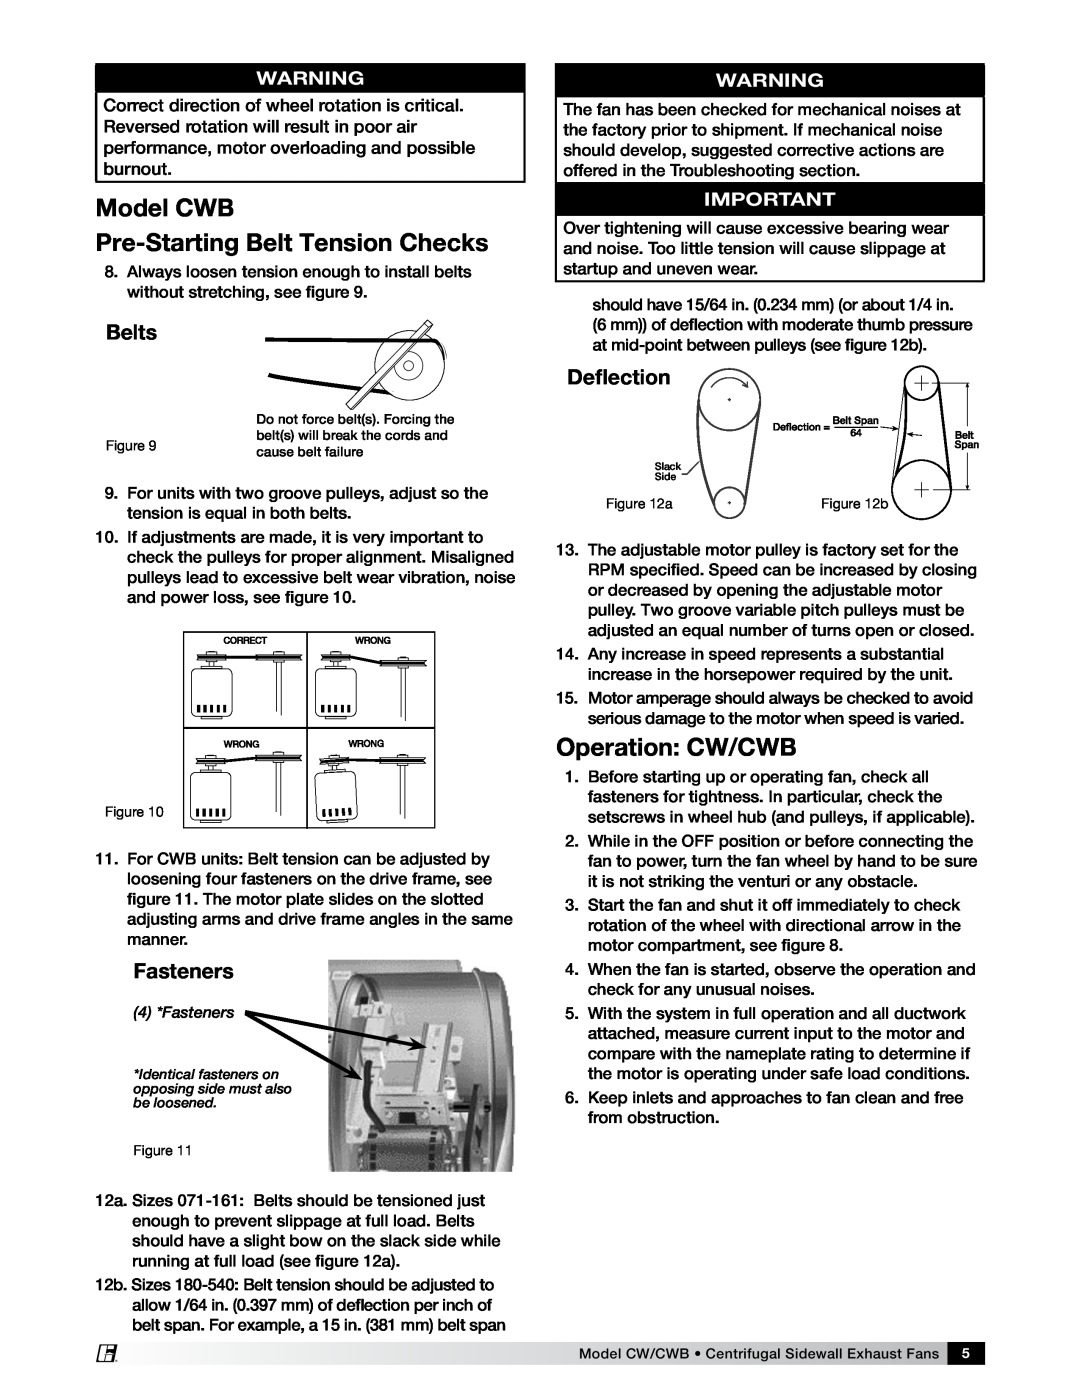 Greenheck Fan manual Model CWB Pre-Starting Belt Tension Checks, Operation CW/CWB, Belts, Fasteners, Deflection 